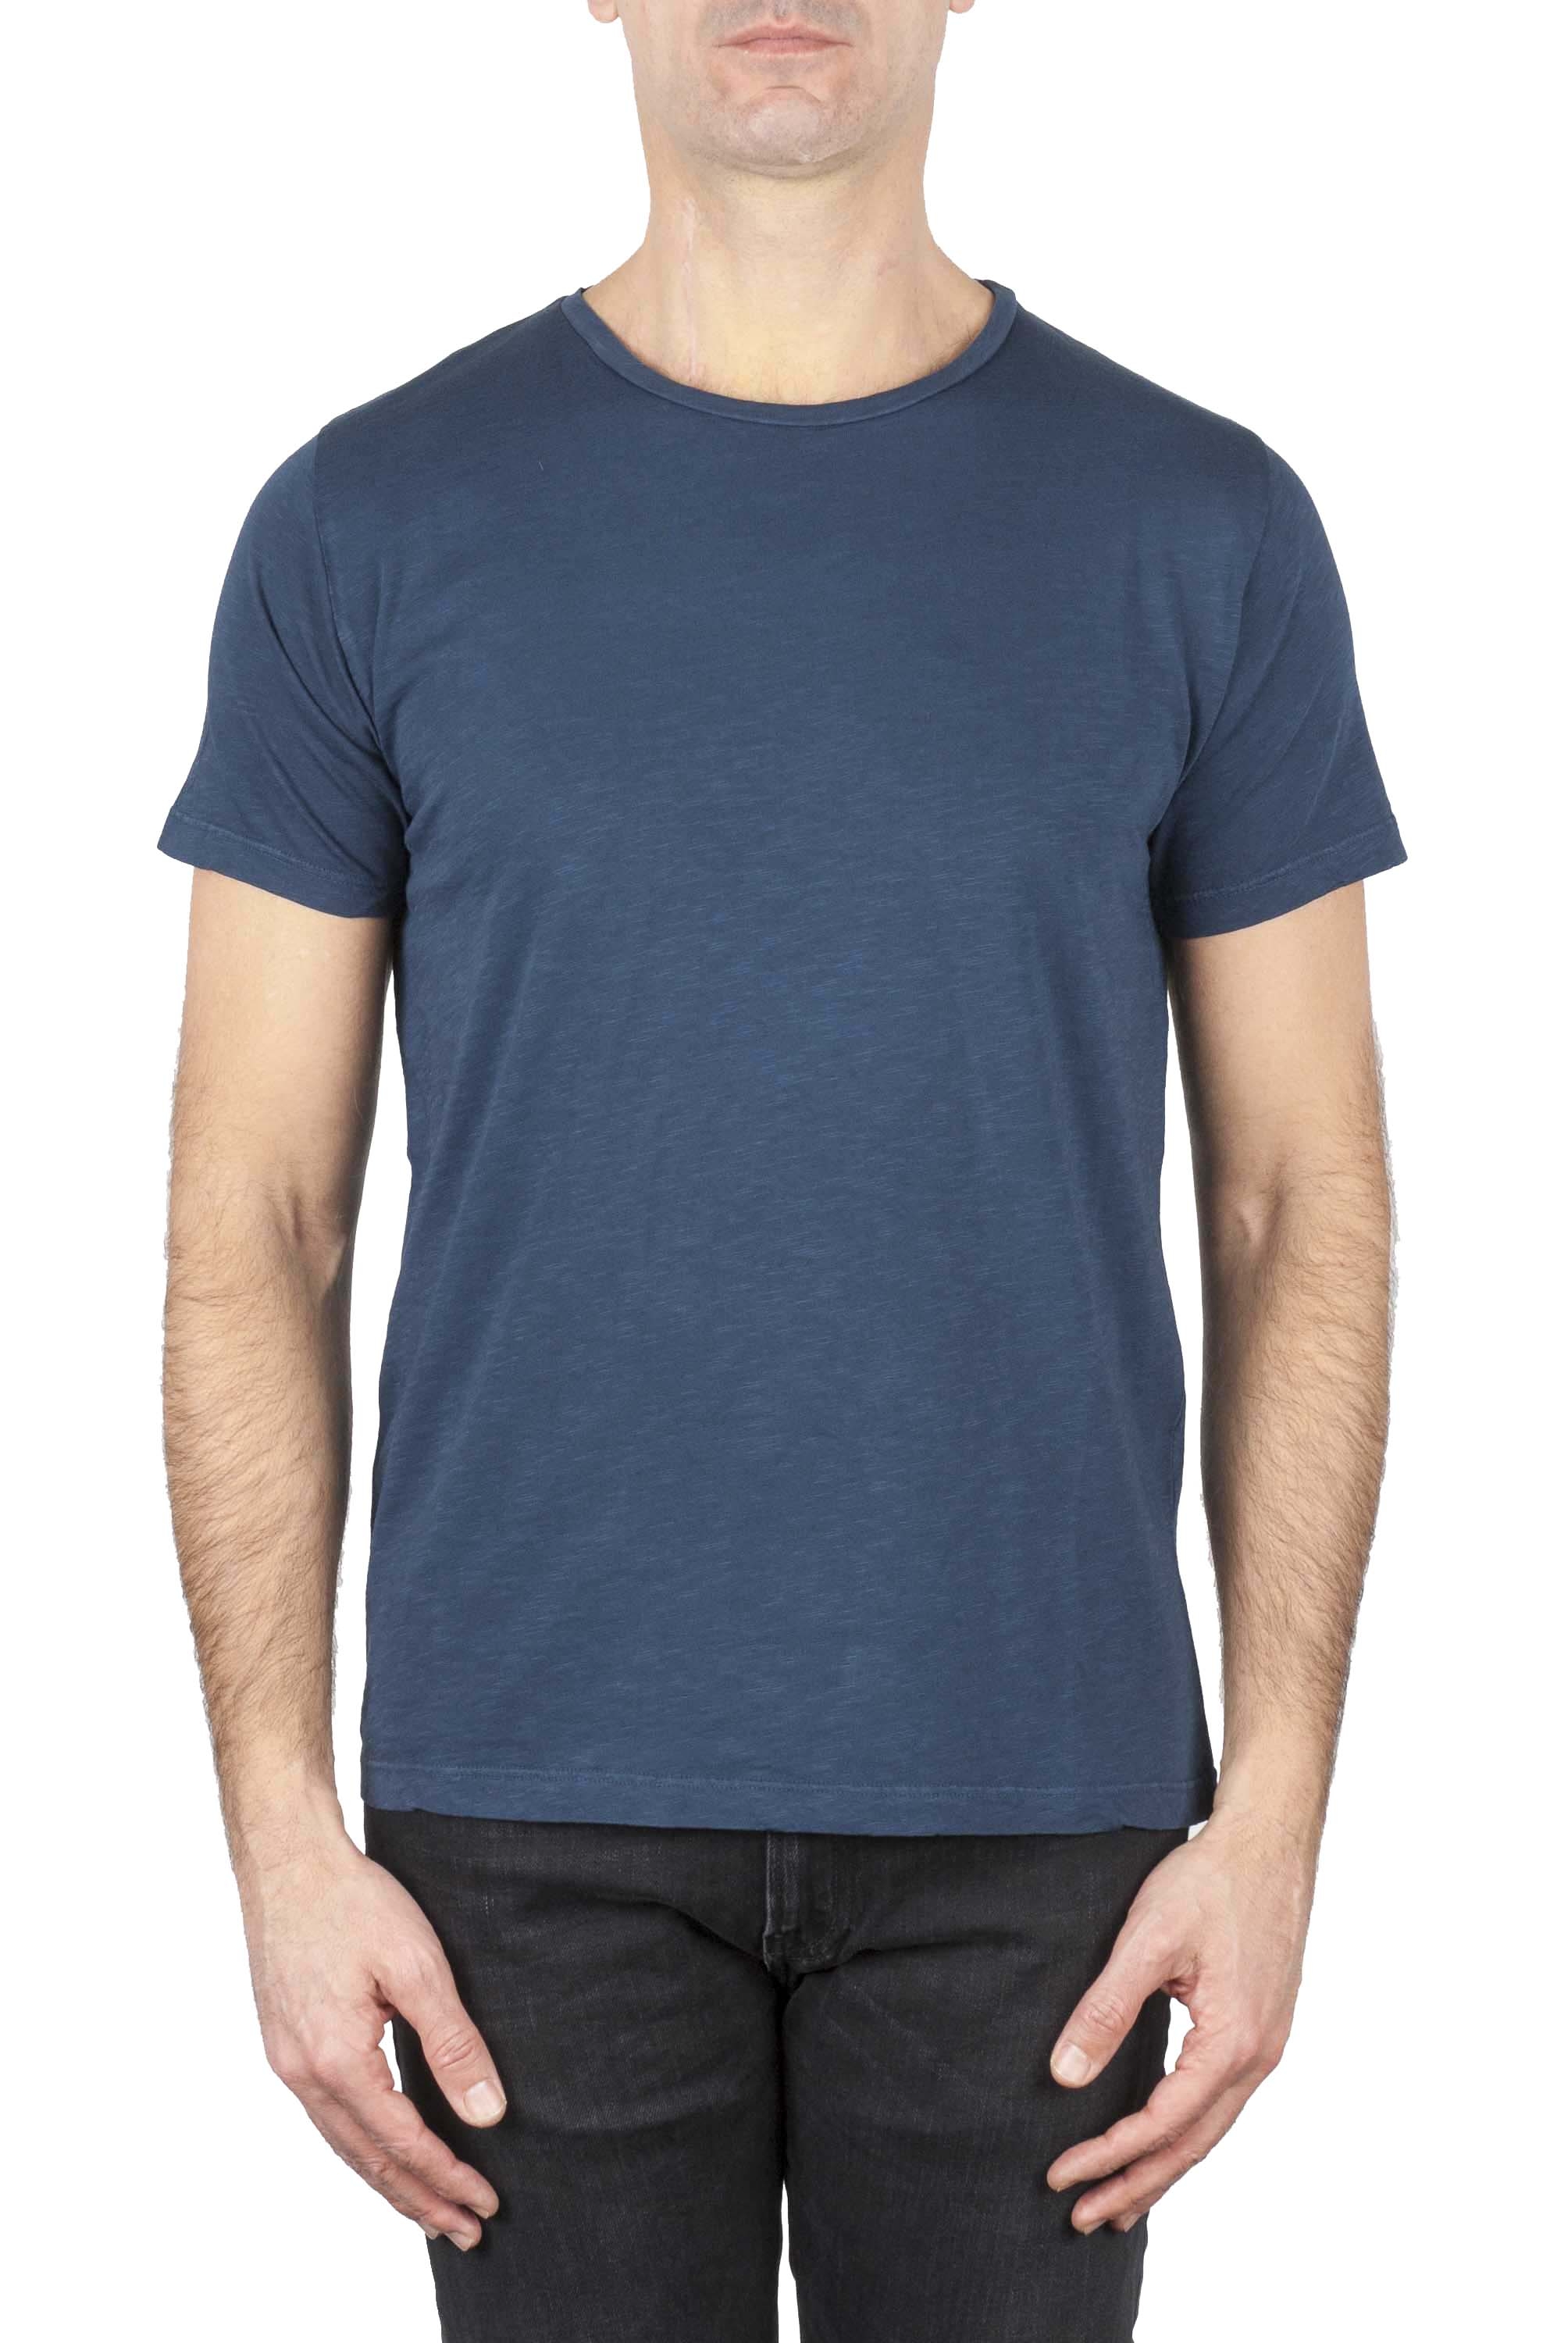 SBU 01648_19AW Camiseta de algodón con cuello redondo en color azul 01